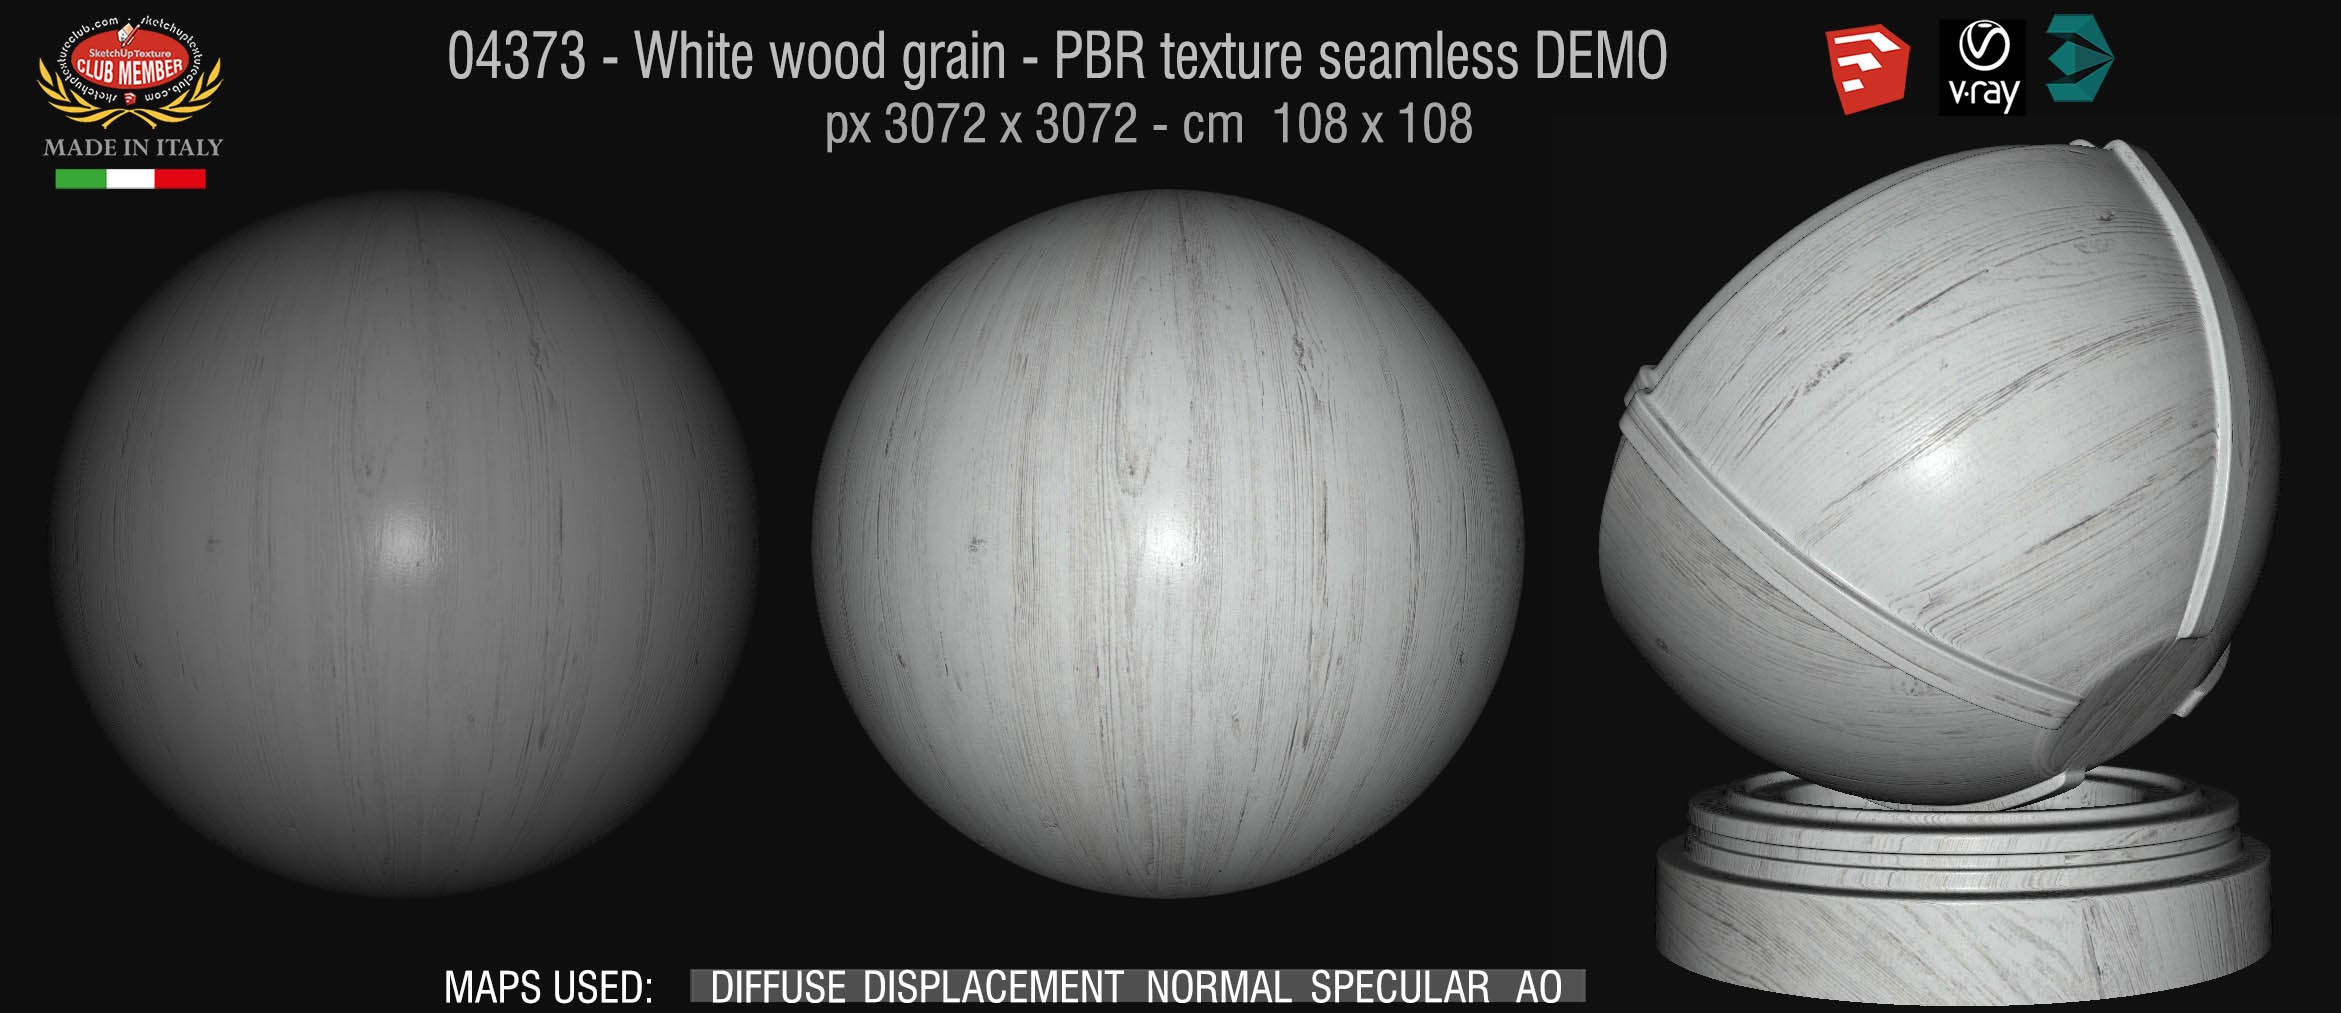 04373 White wood grain - PBR texture seamless DEMO